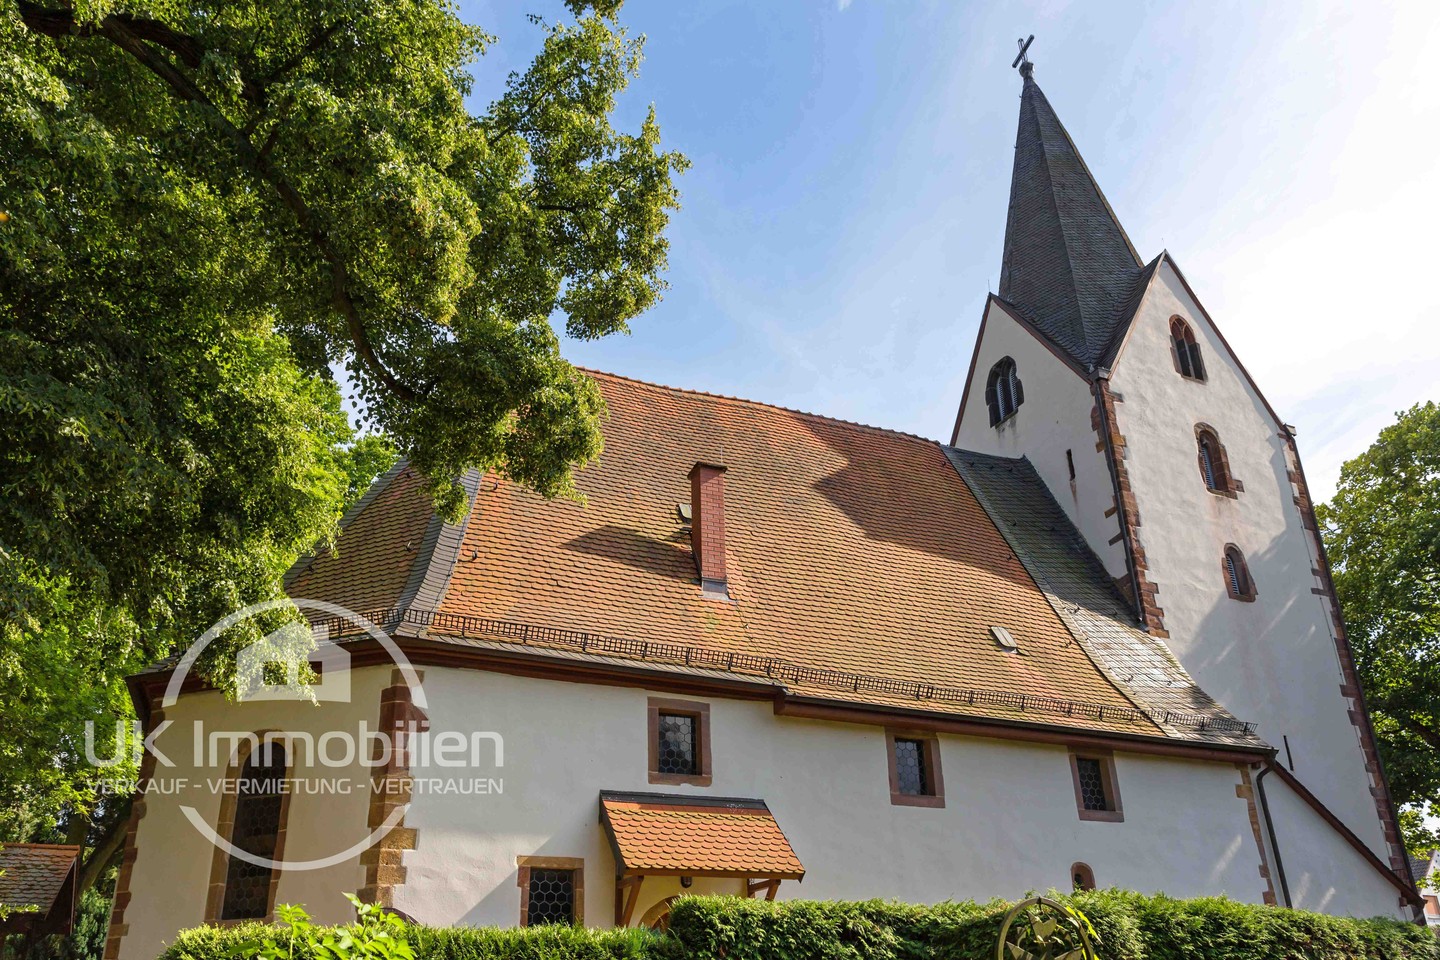 Immobilienmakler-Bad-Vilbel-Auferstehungskirche-Bad-Vilbel-älteste-Kirche-Bad-Vilbel.jpg